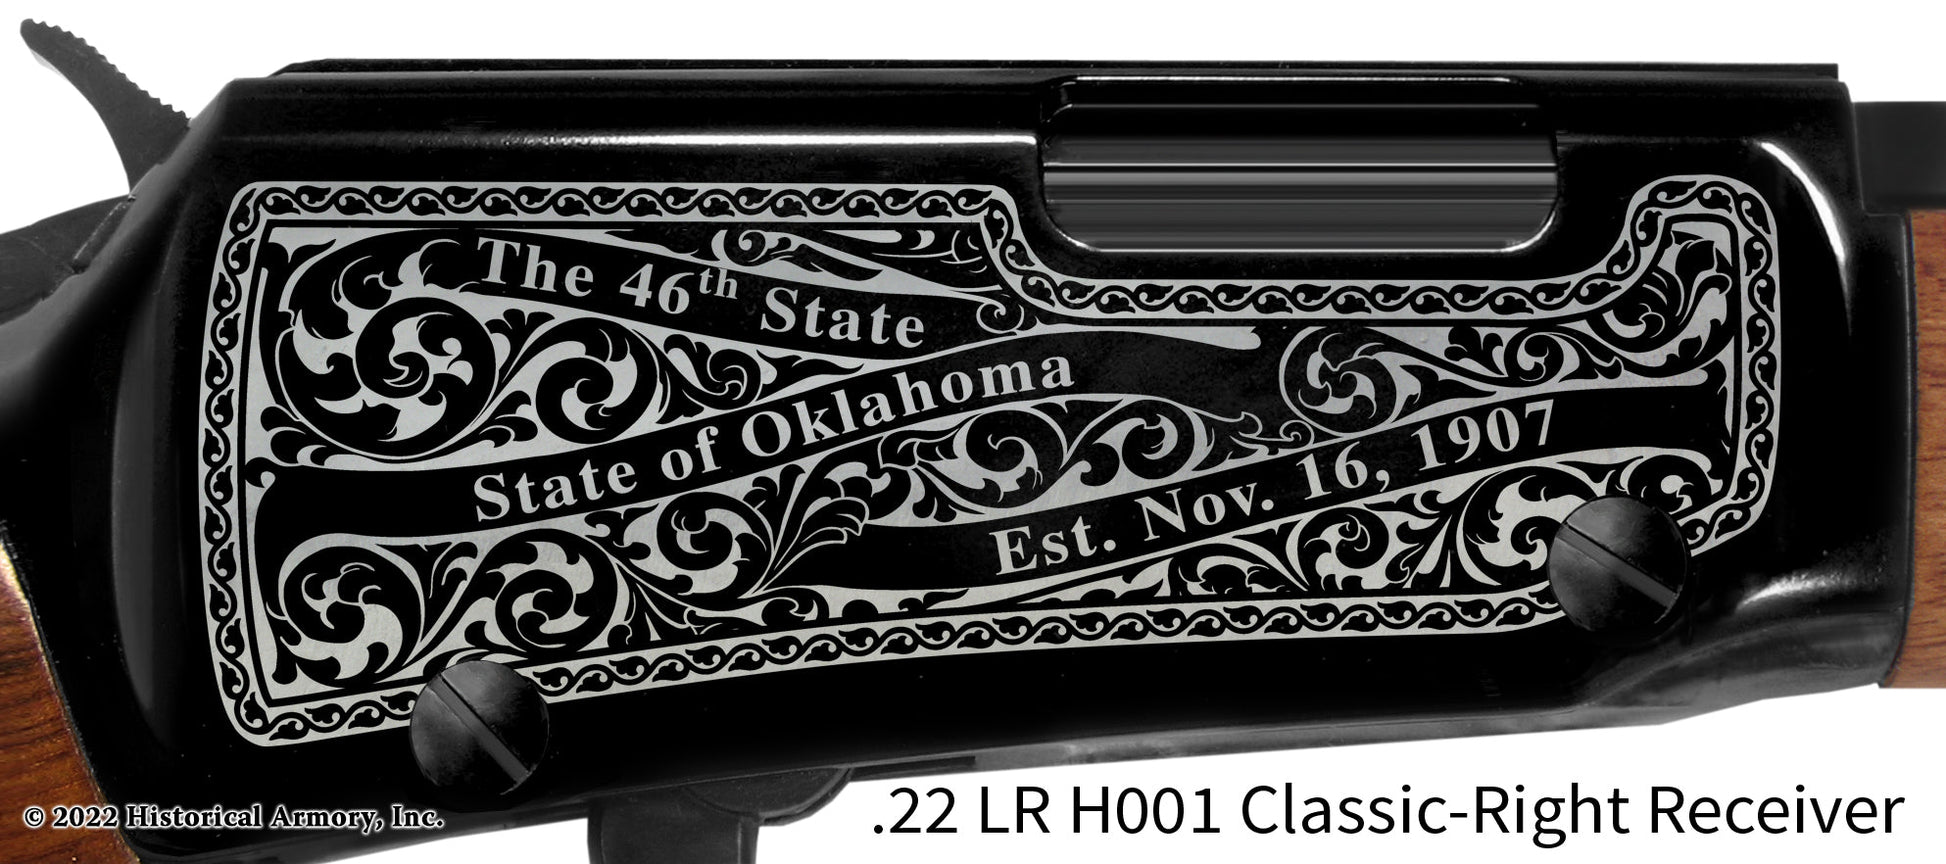 Grady County Oklahoma Engraved Henry H001 Rifle